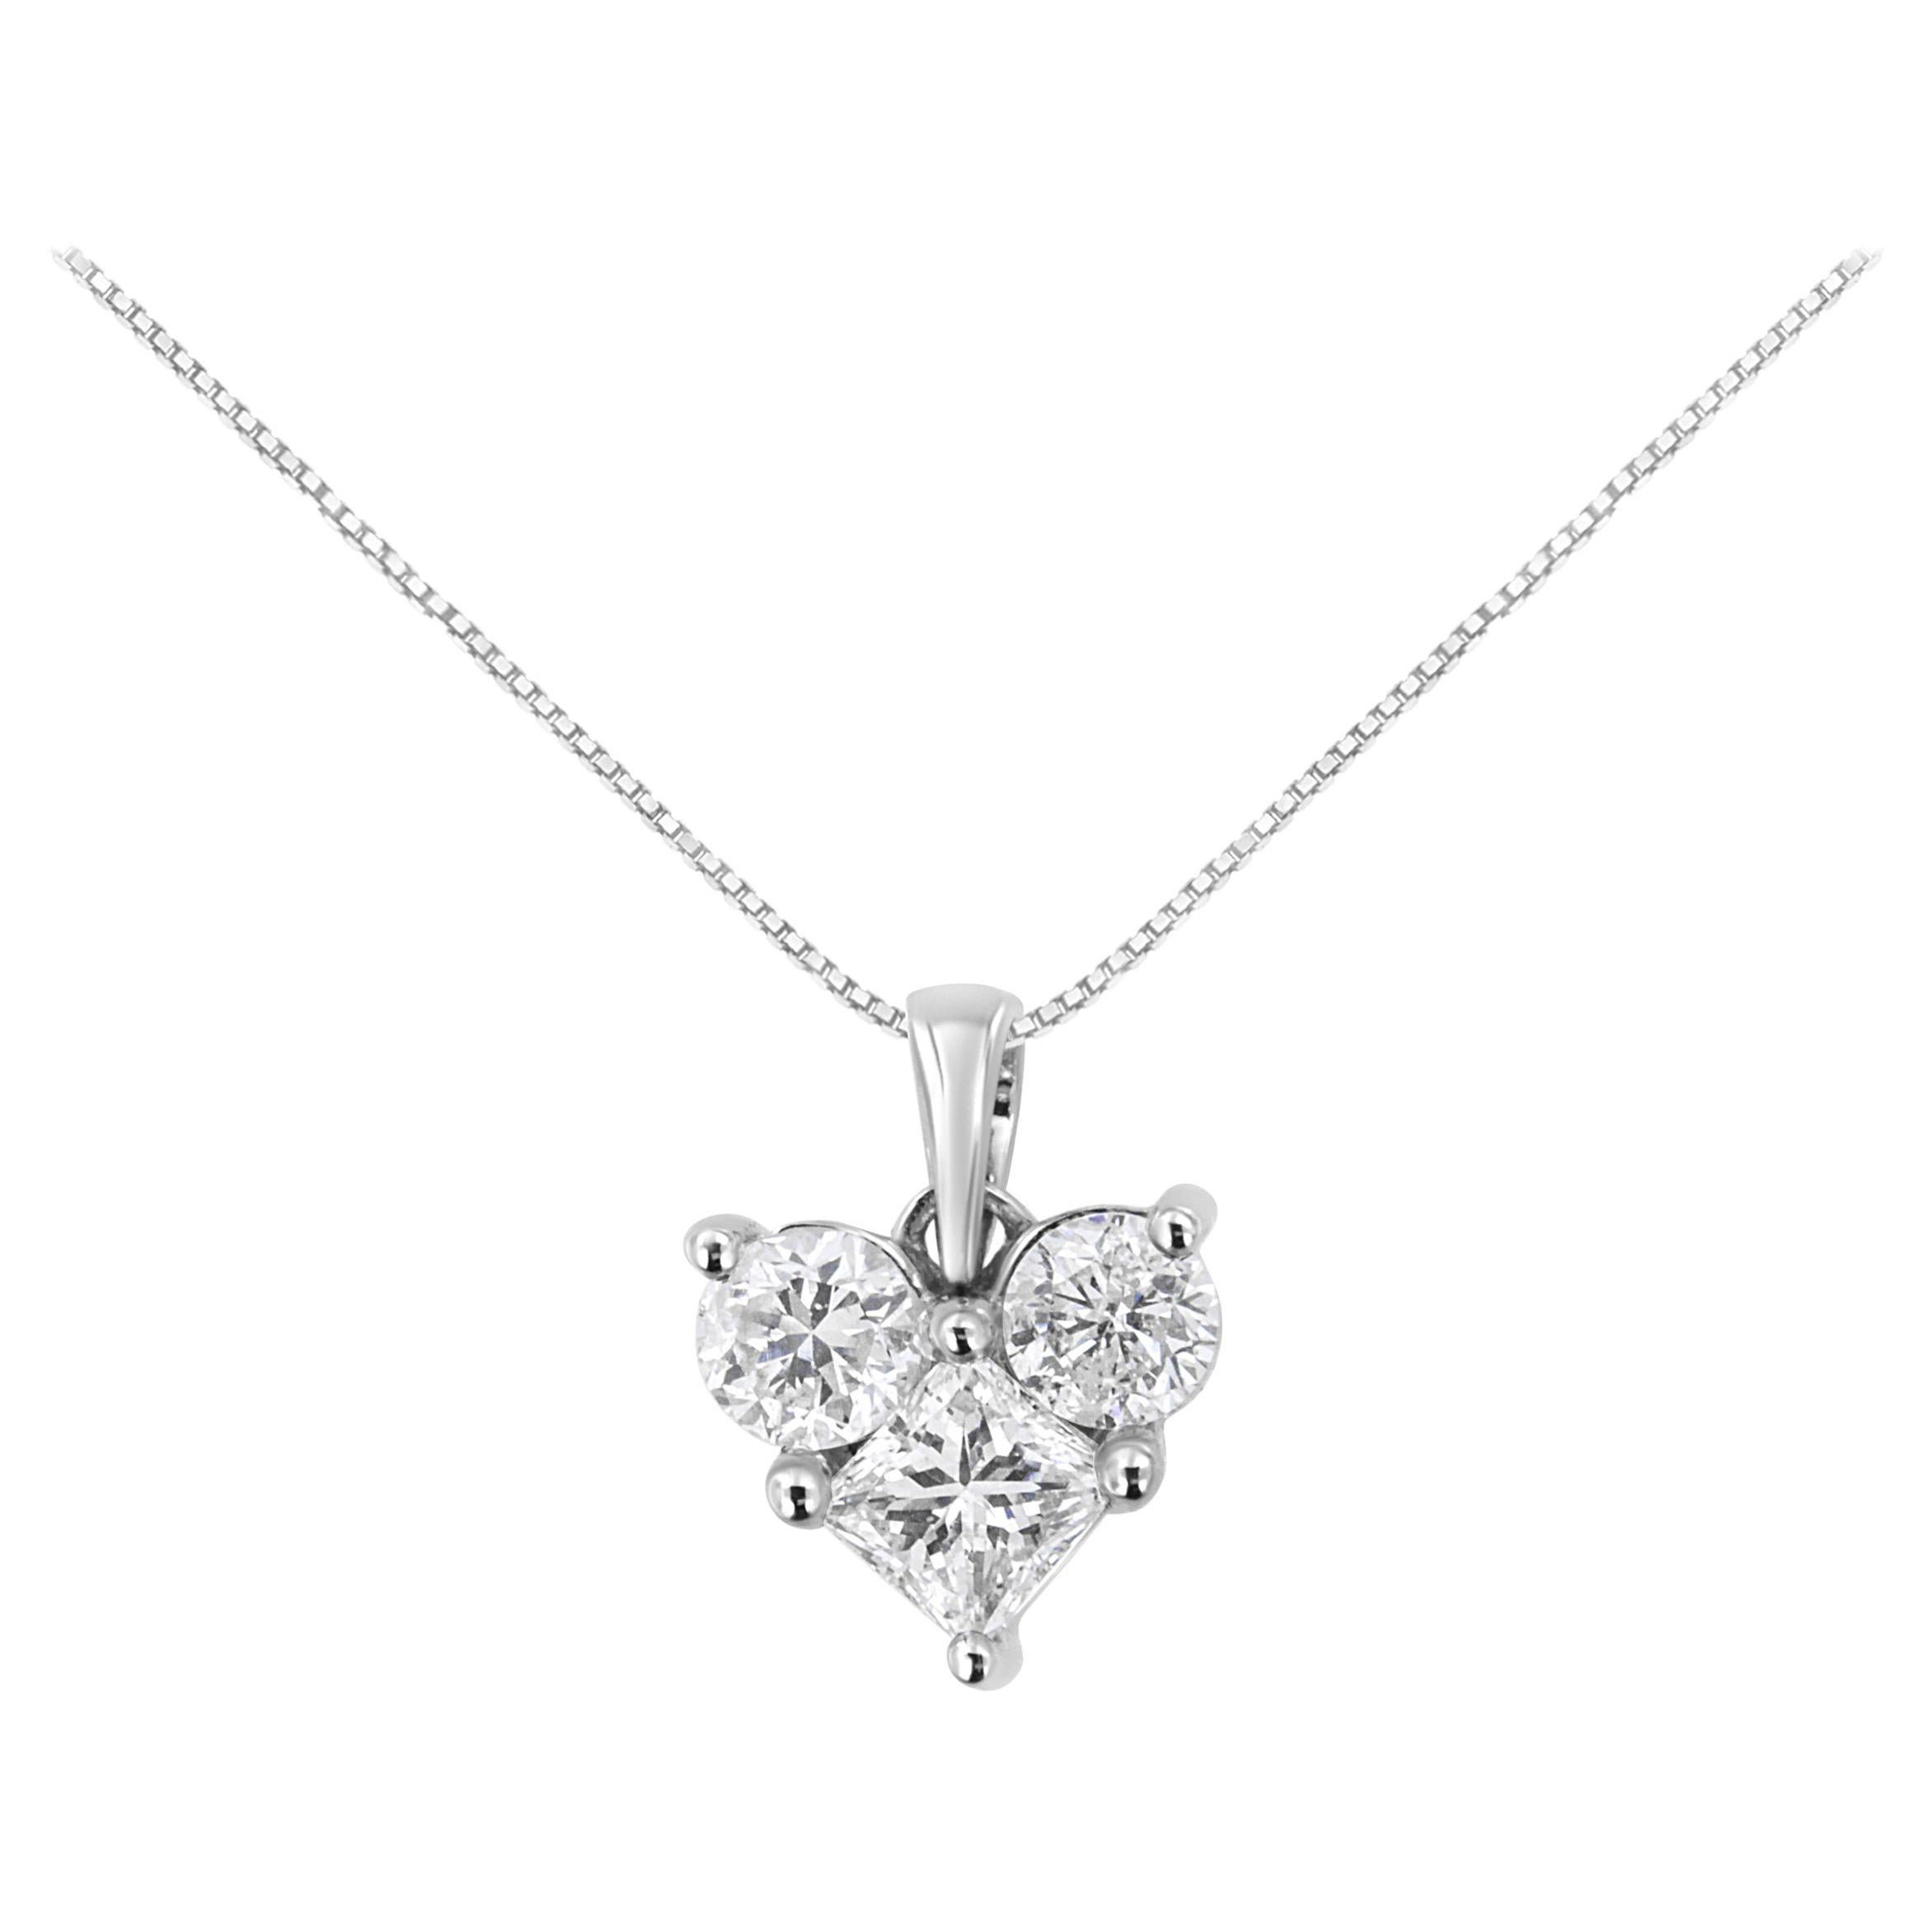 10K White Gold 1.0 Carat Diamond Heart Shaped Pendant Necklace For Sale